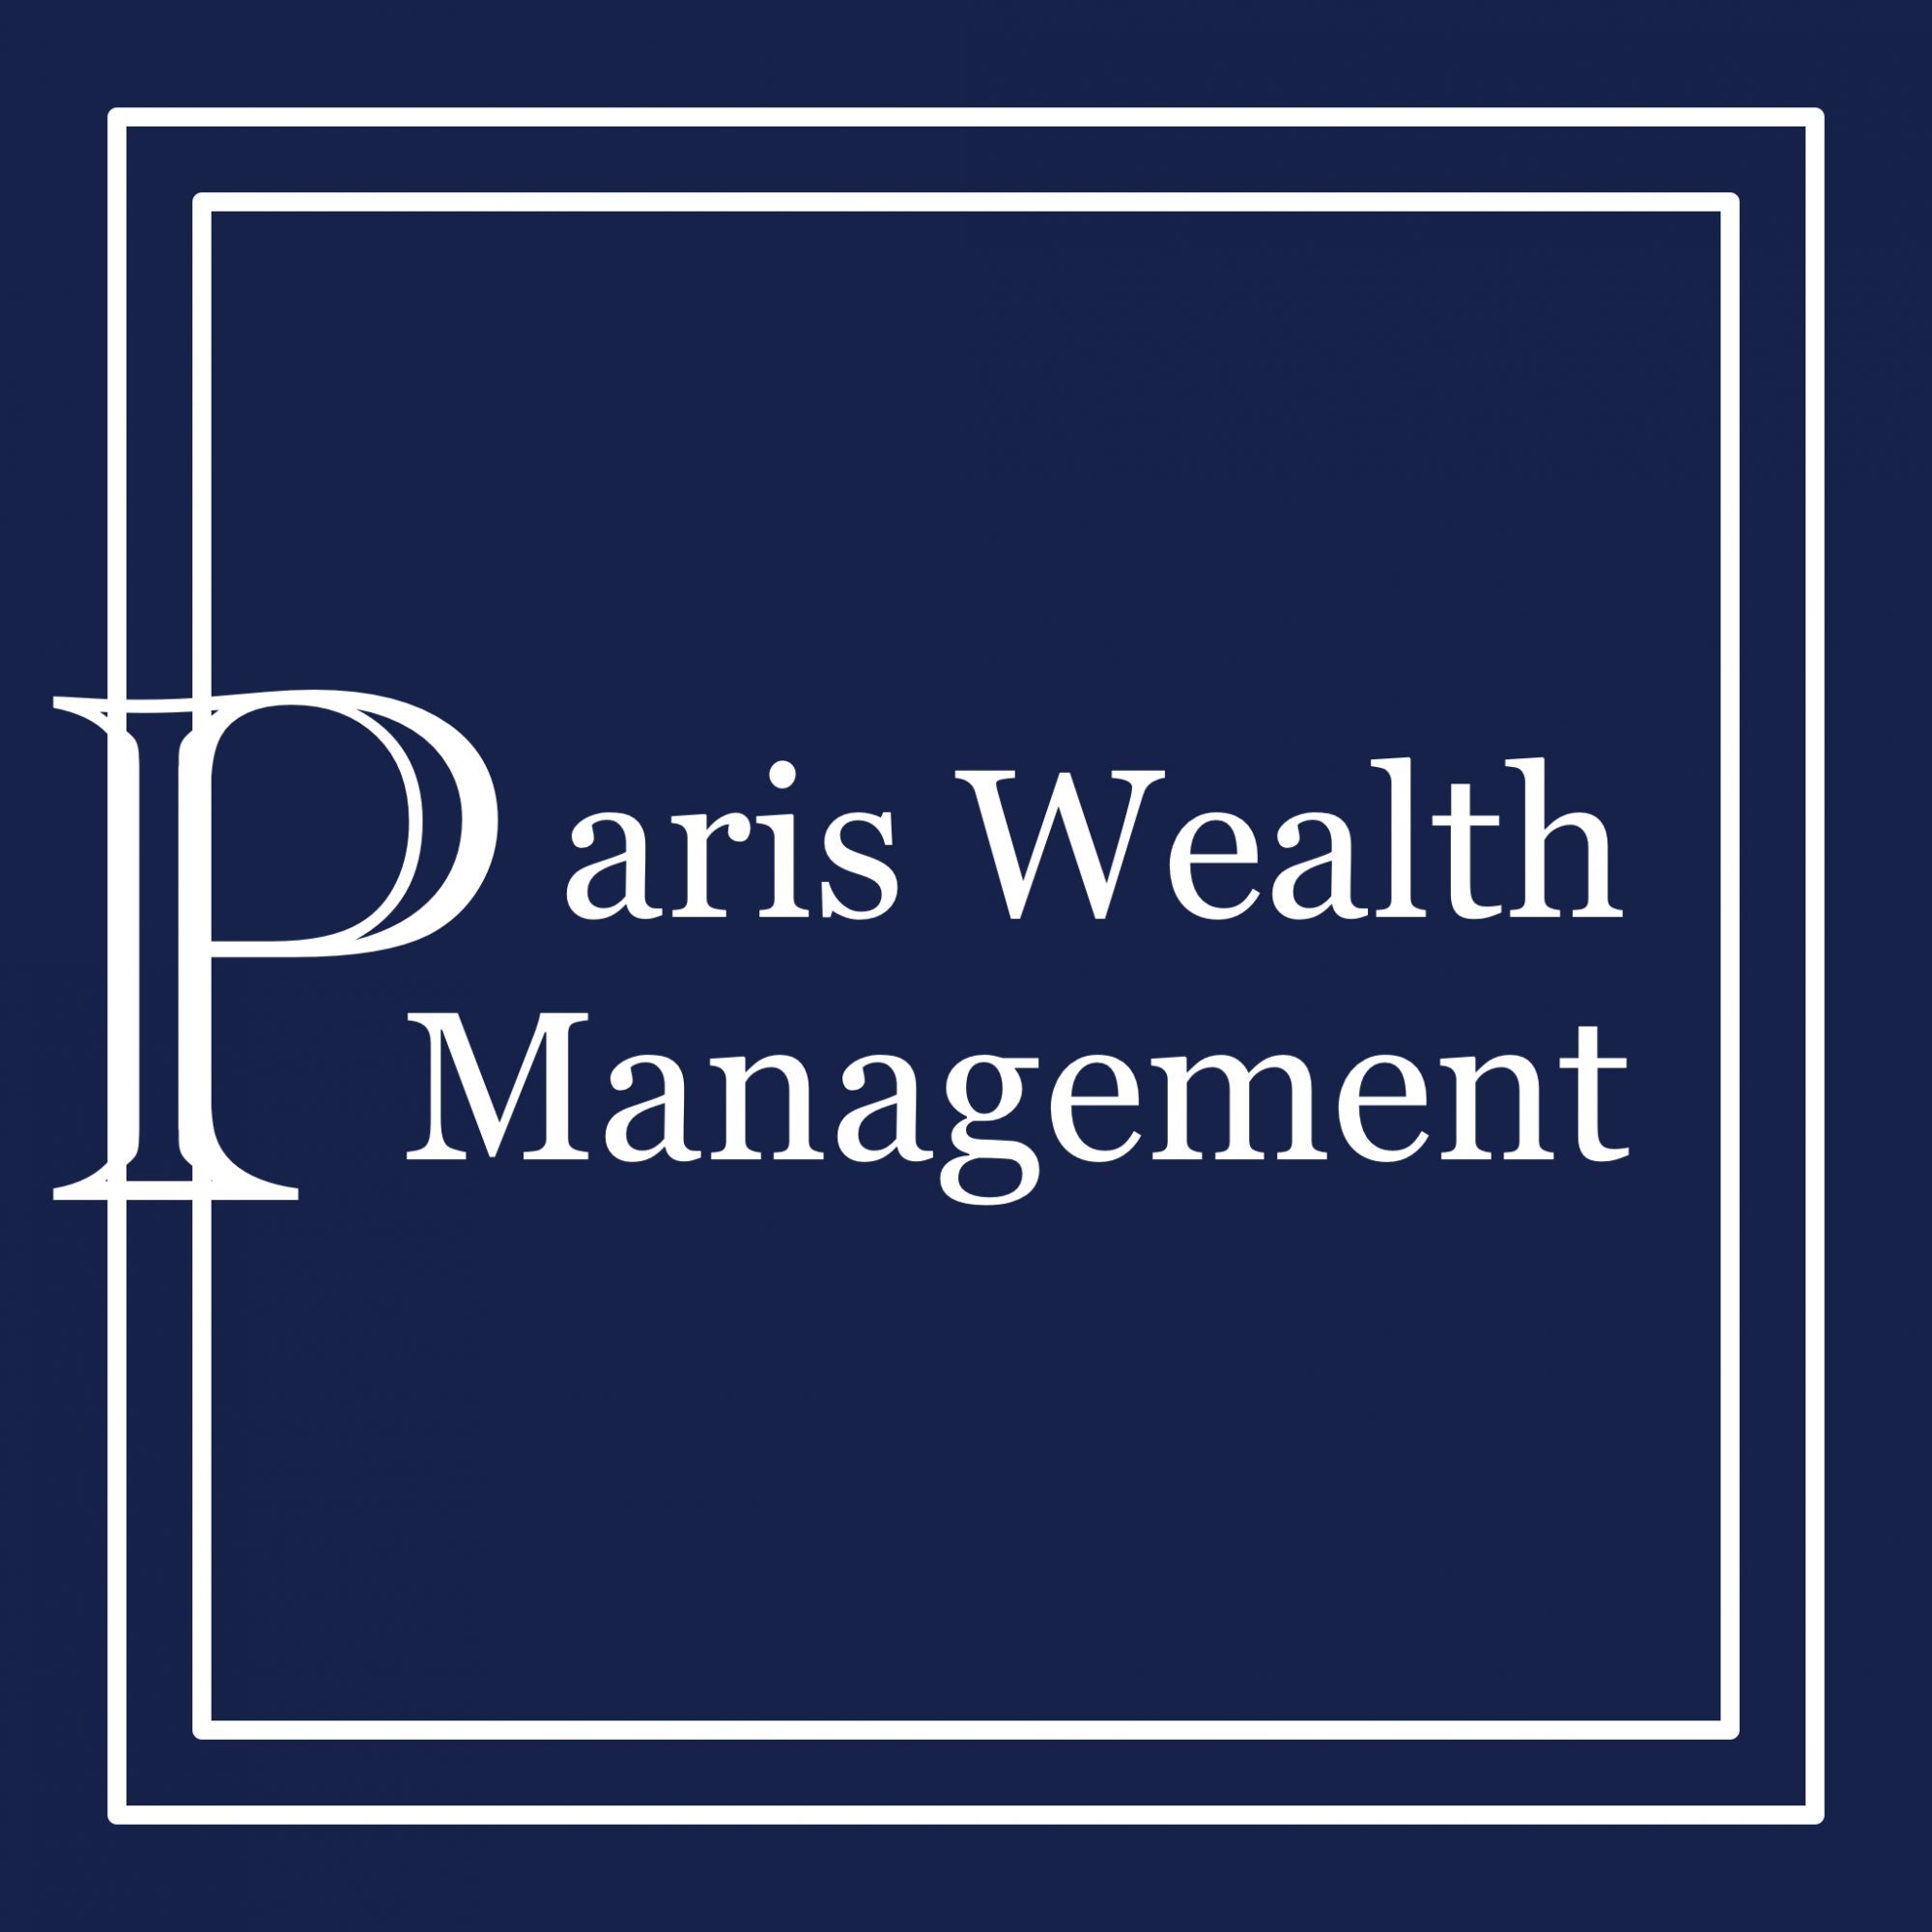 Paris Wealth Management 巴黎财富管理